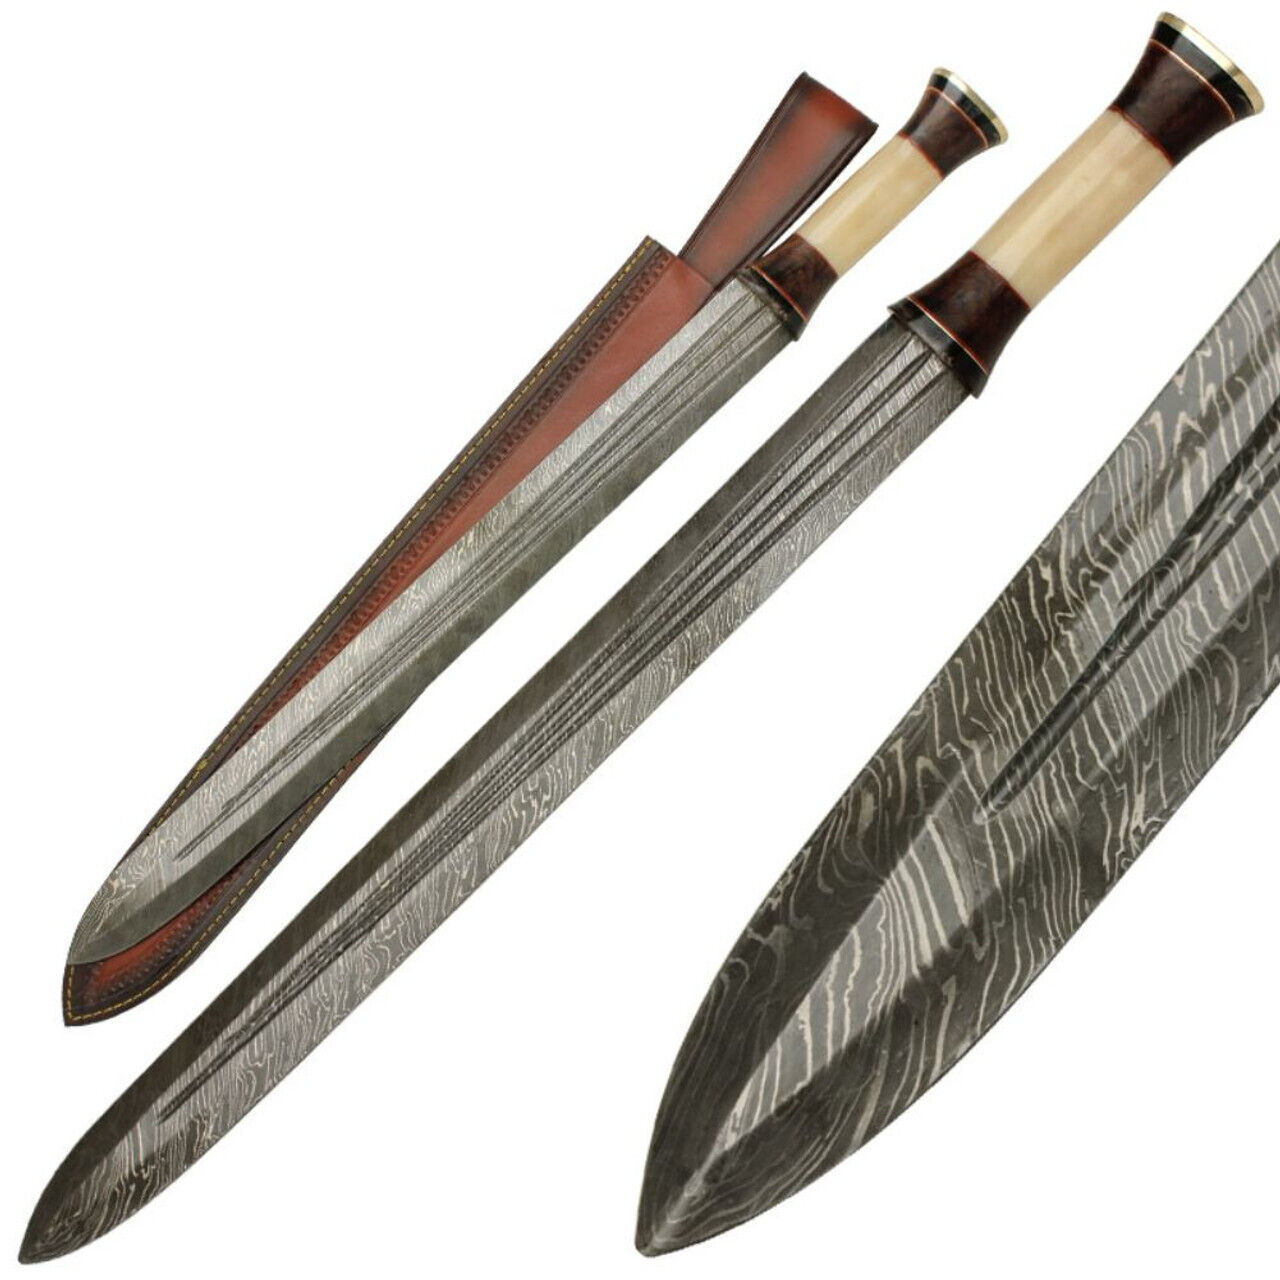 Handmade Ancient Greek Infantry Damascus Steel Spatha Sword with Leather Sheath